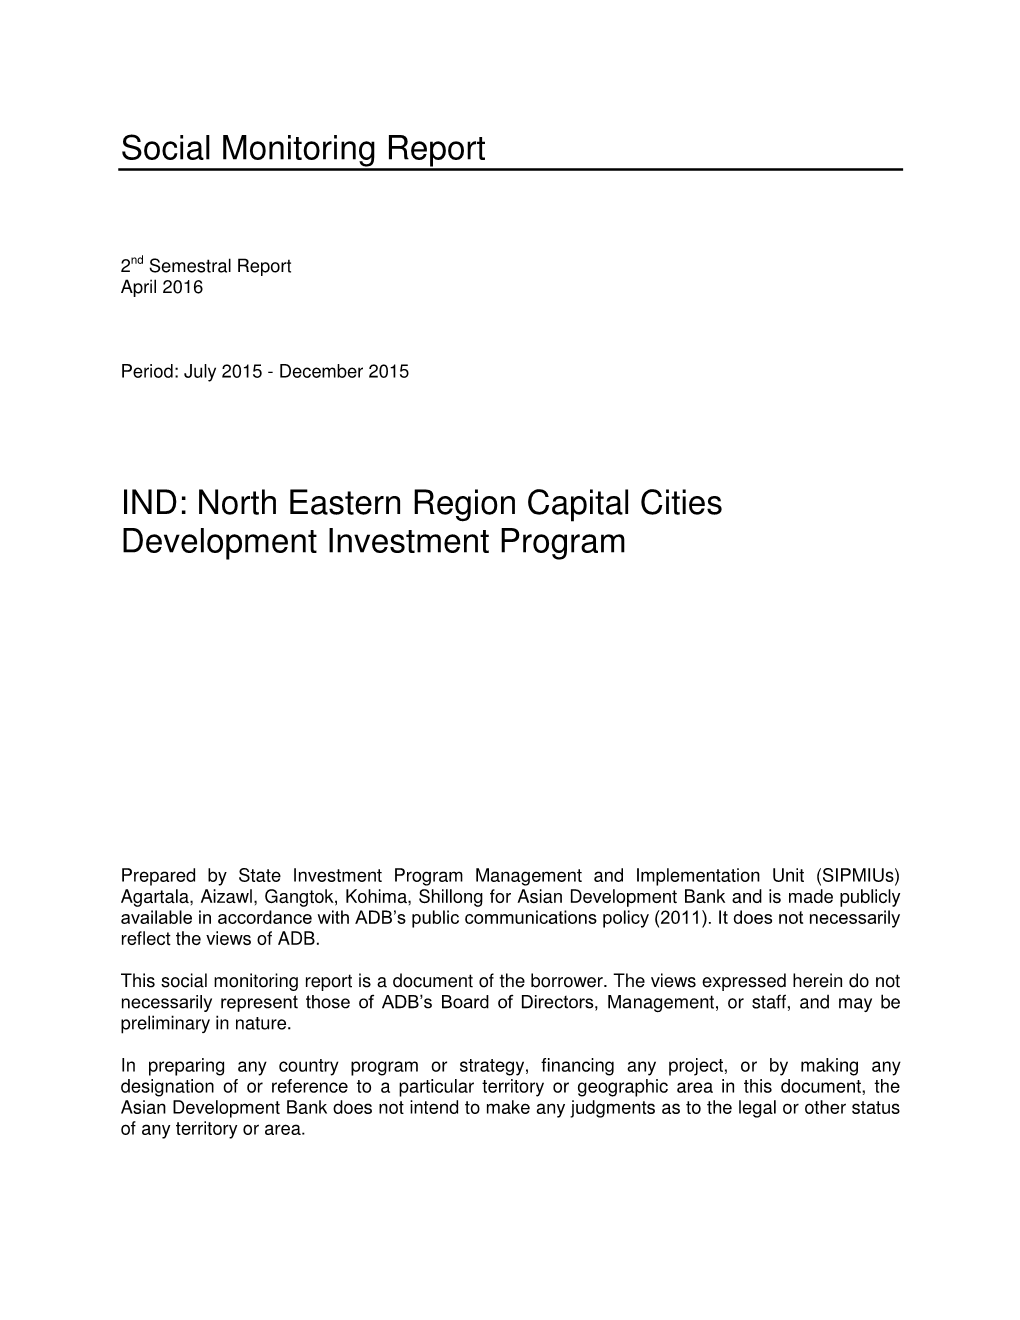 North Eastern Region Capital Cities Development Investment Program